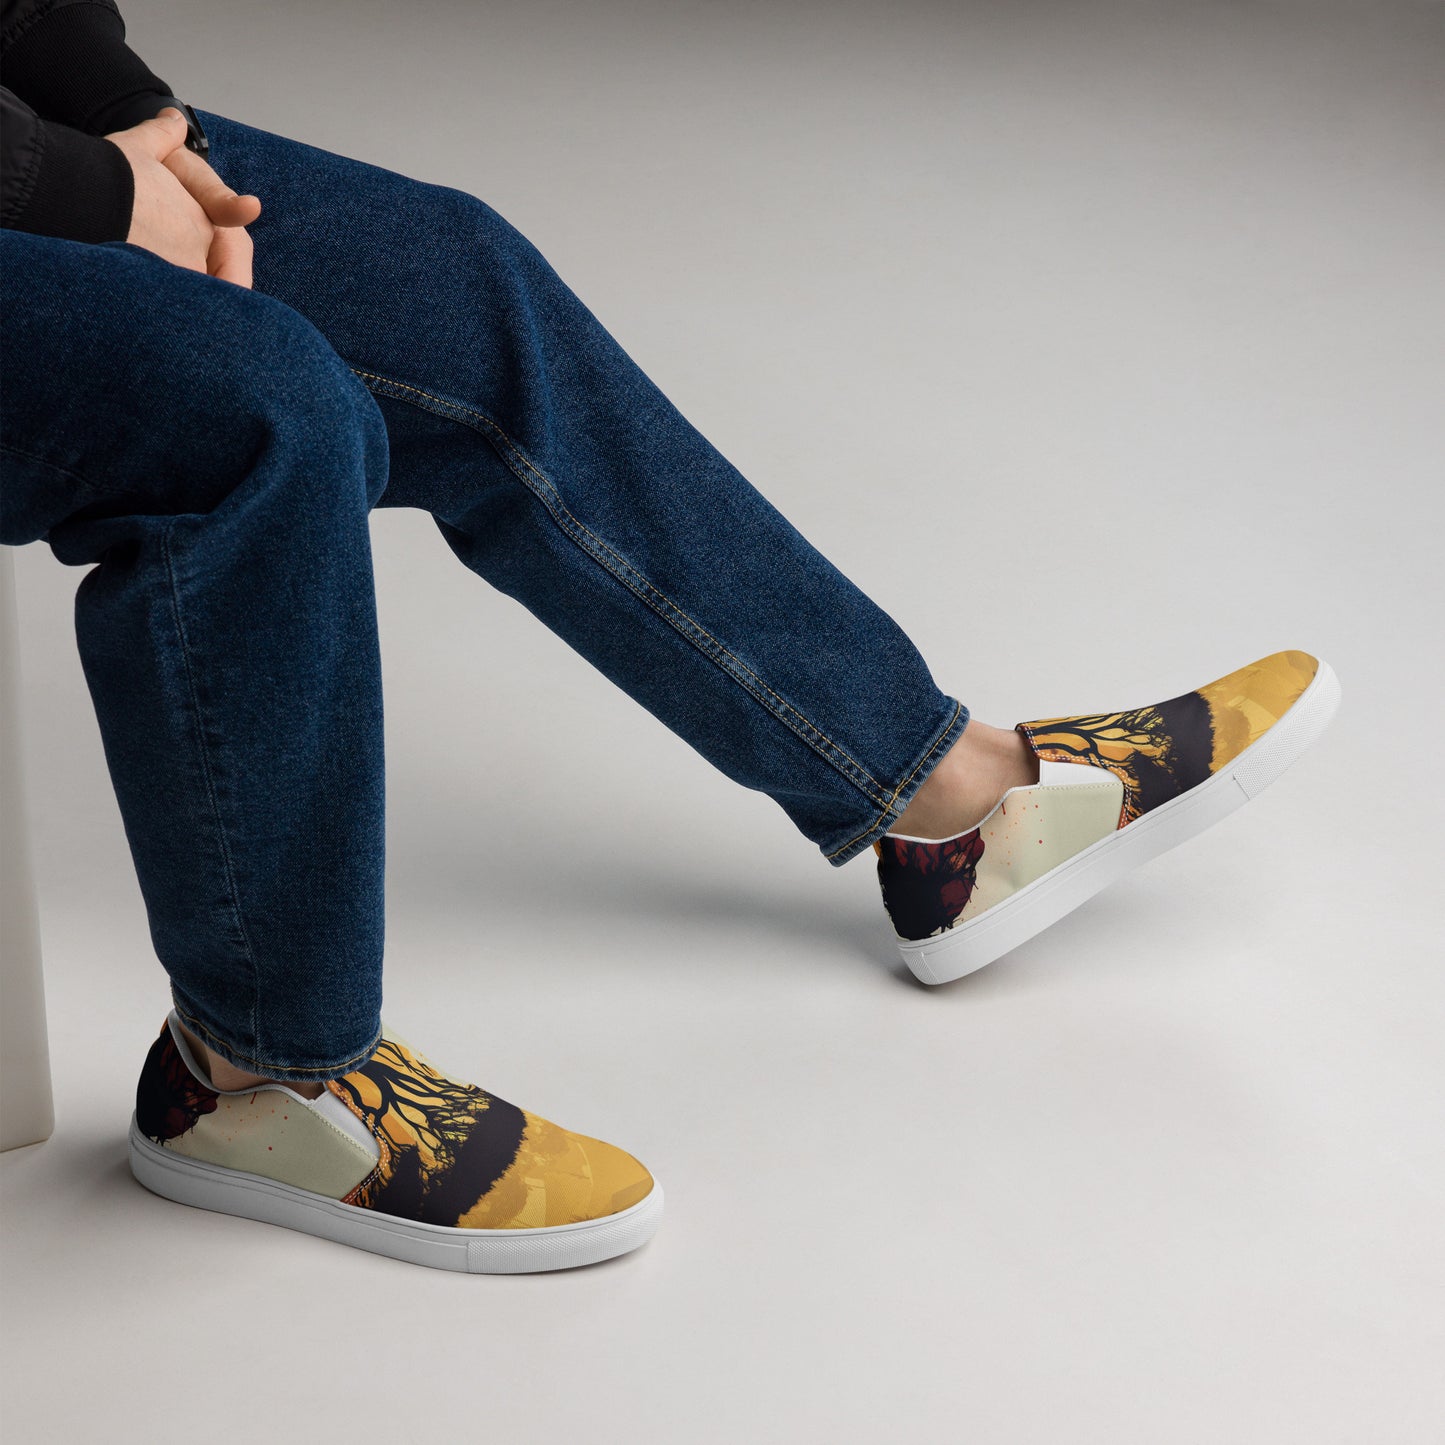 Ethnic design print: Men’s slip-on canvas shoes